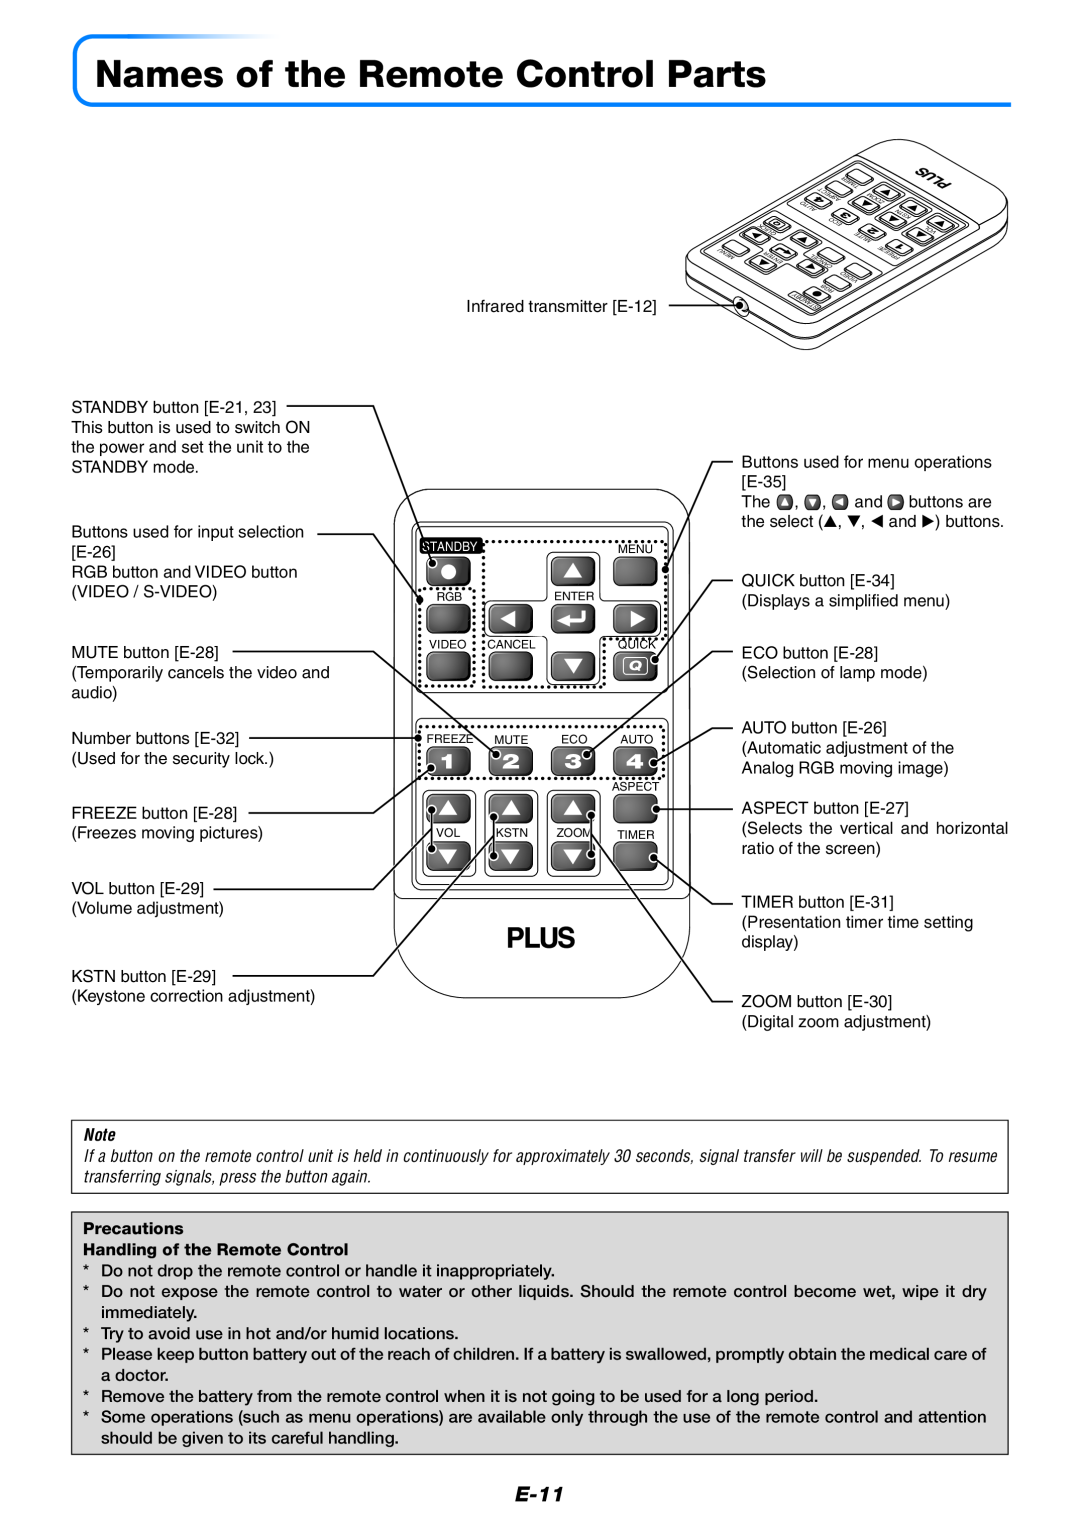 PLUS Vision U4-232 user manual Names of the Remote Control Parts, E-11, Precautions Handling of the Remote Control 